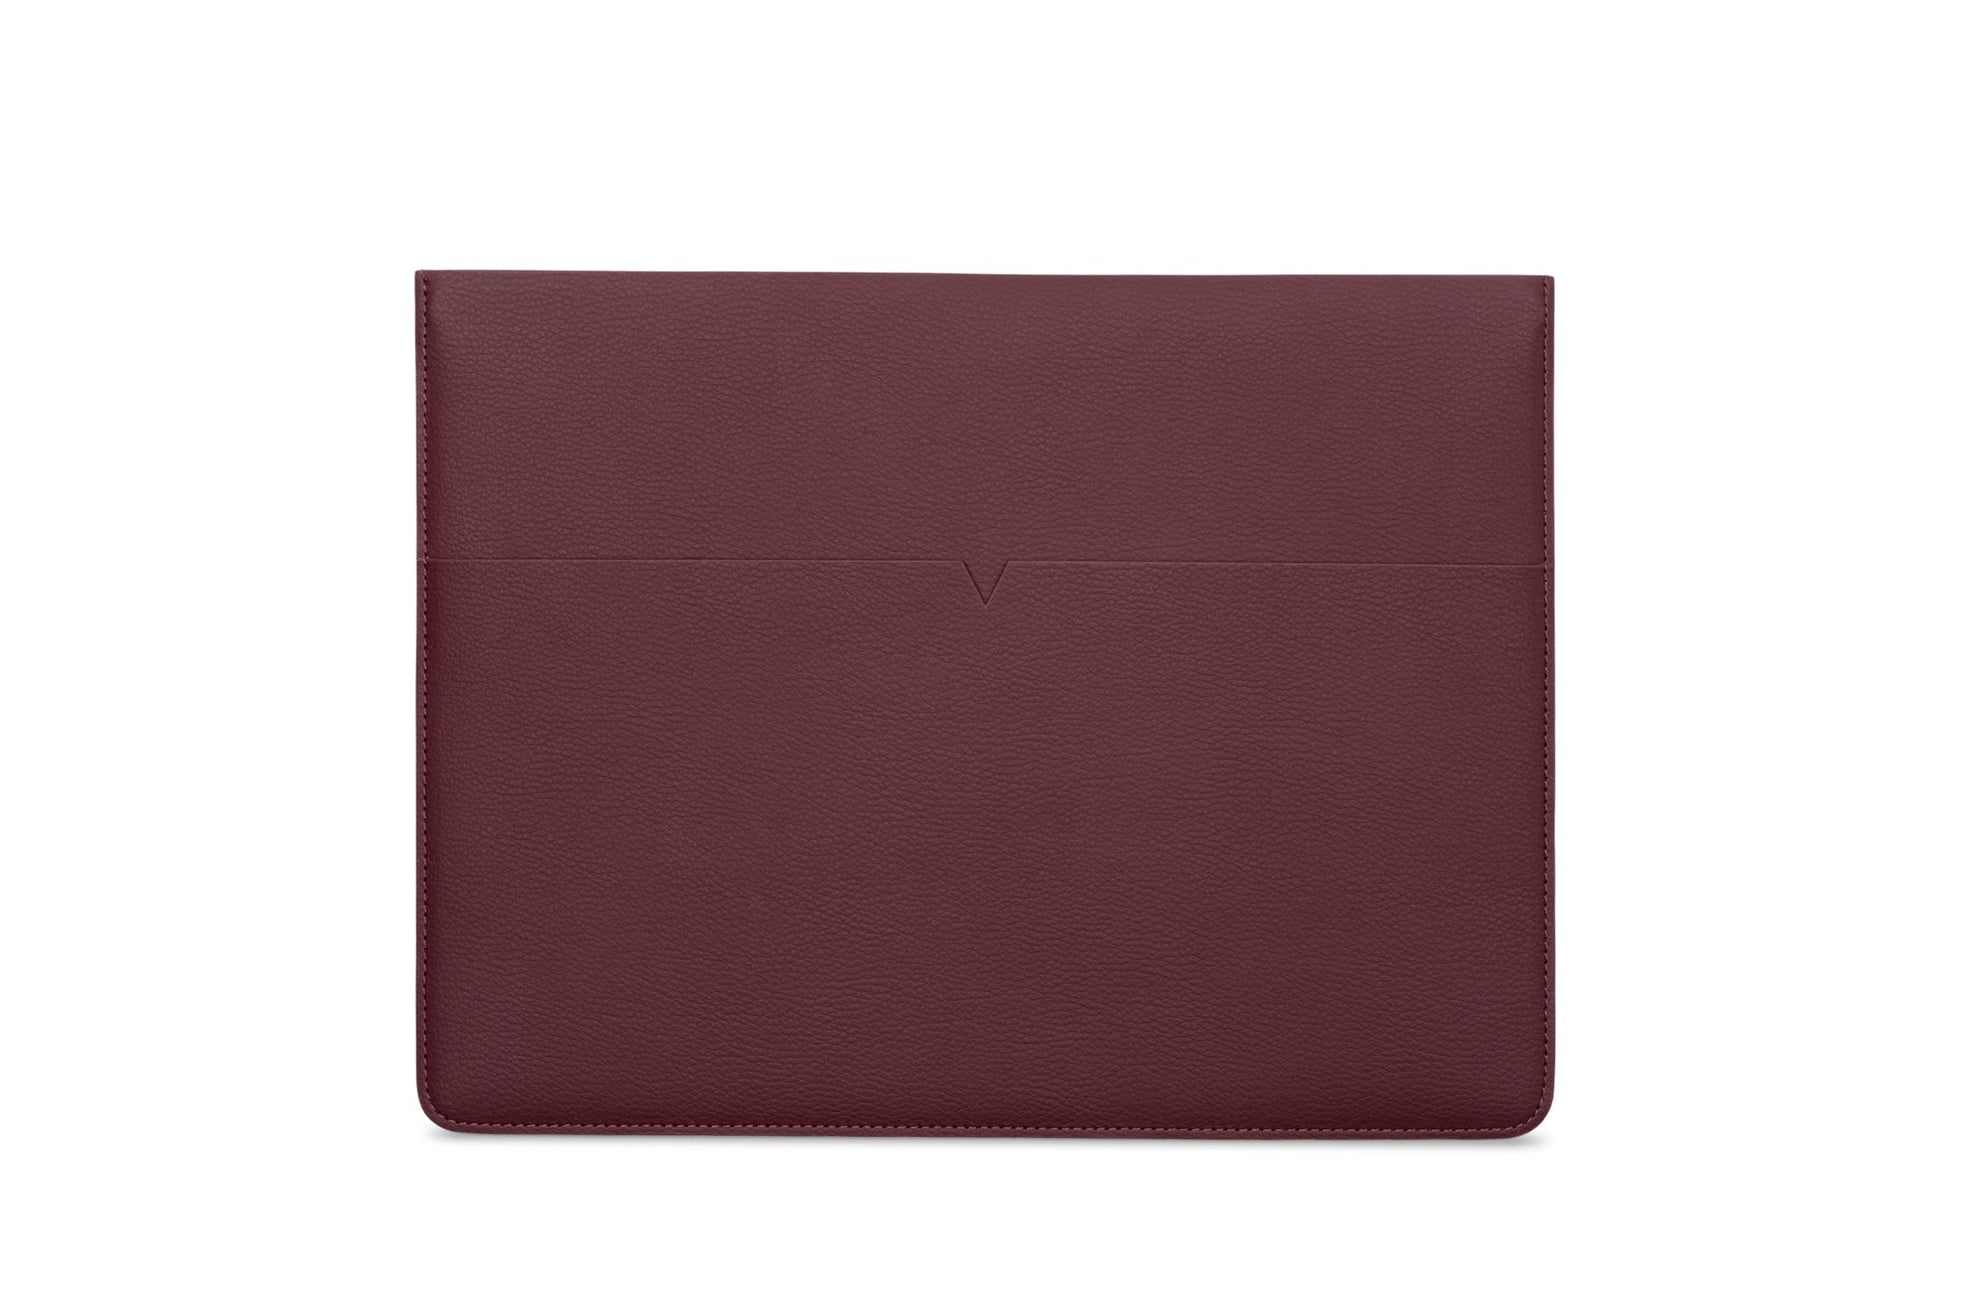 The MacBook Sleeve 13-inch - Sample Sale in Technik in Burgundy image 1